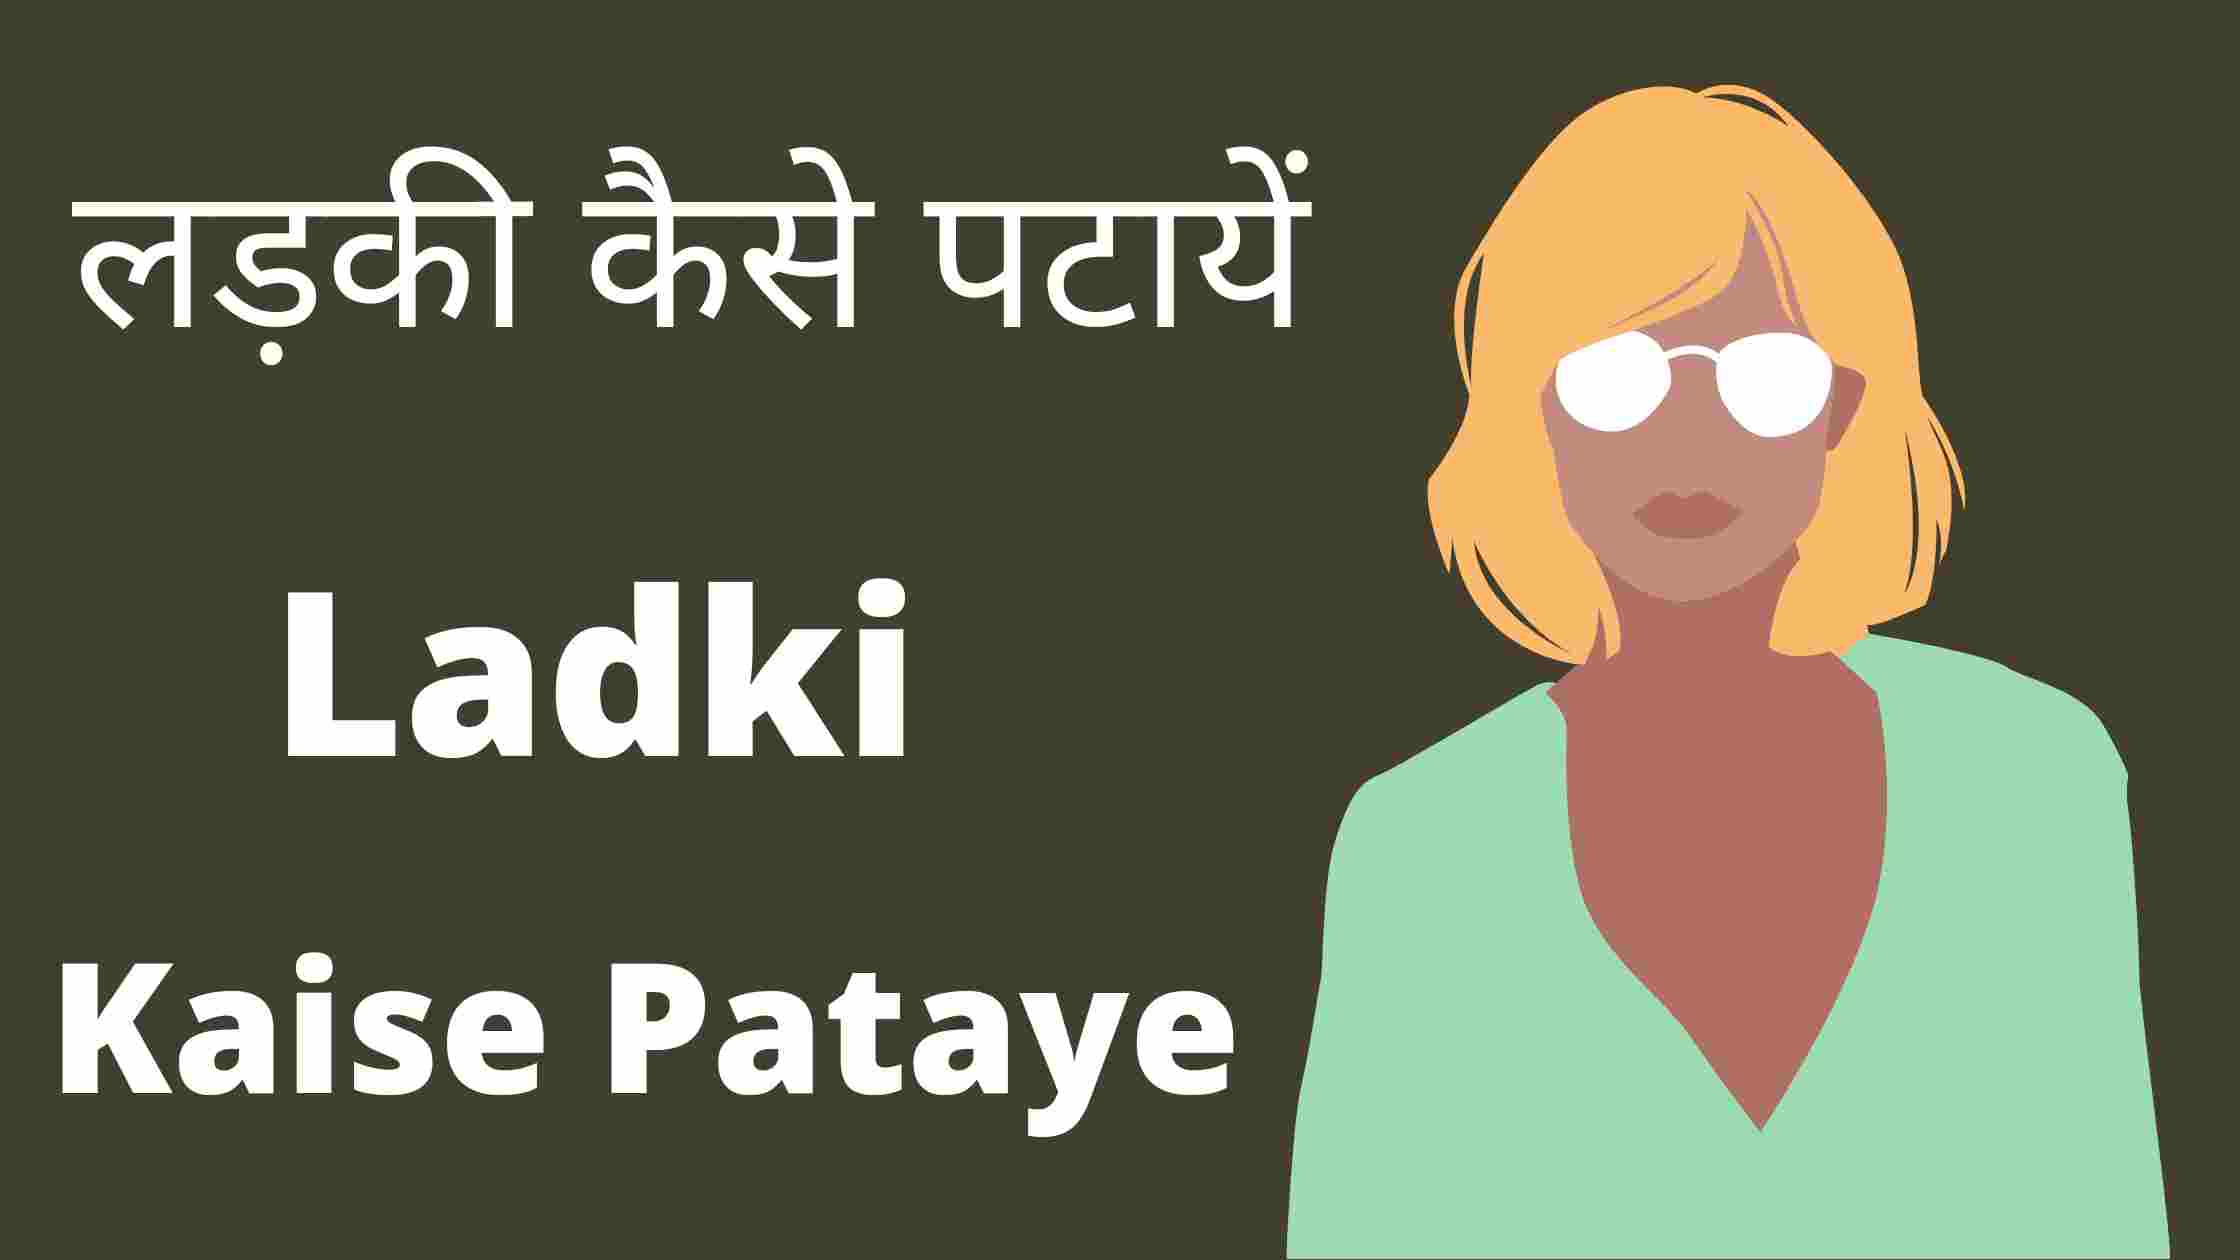 लड़की कैसे पटाये - Ladki Pataye